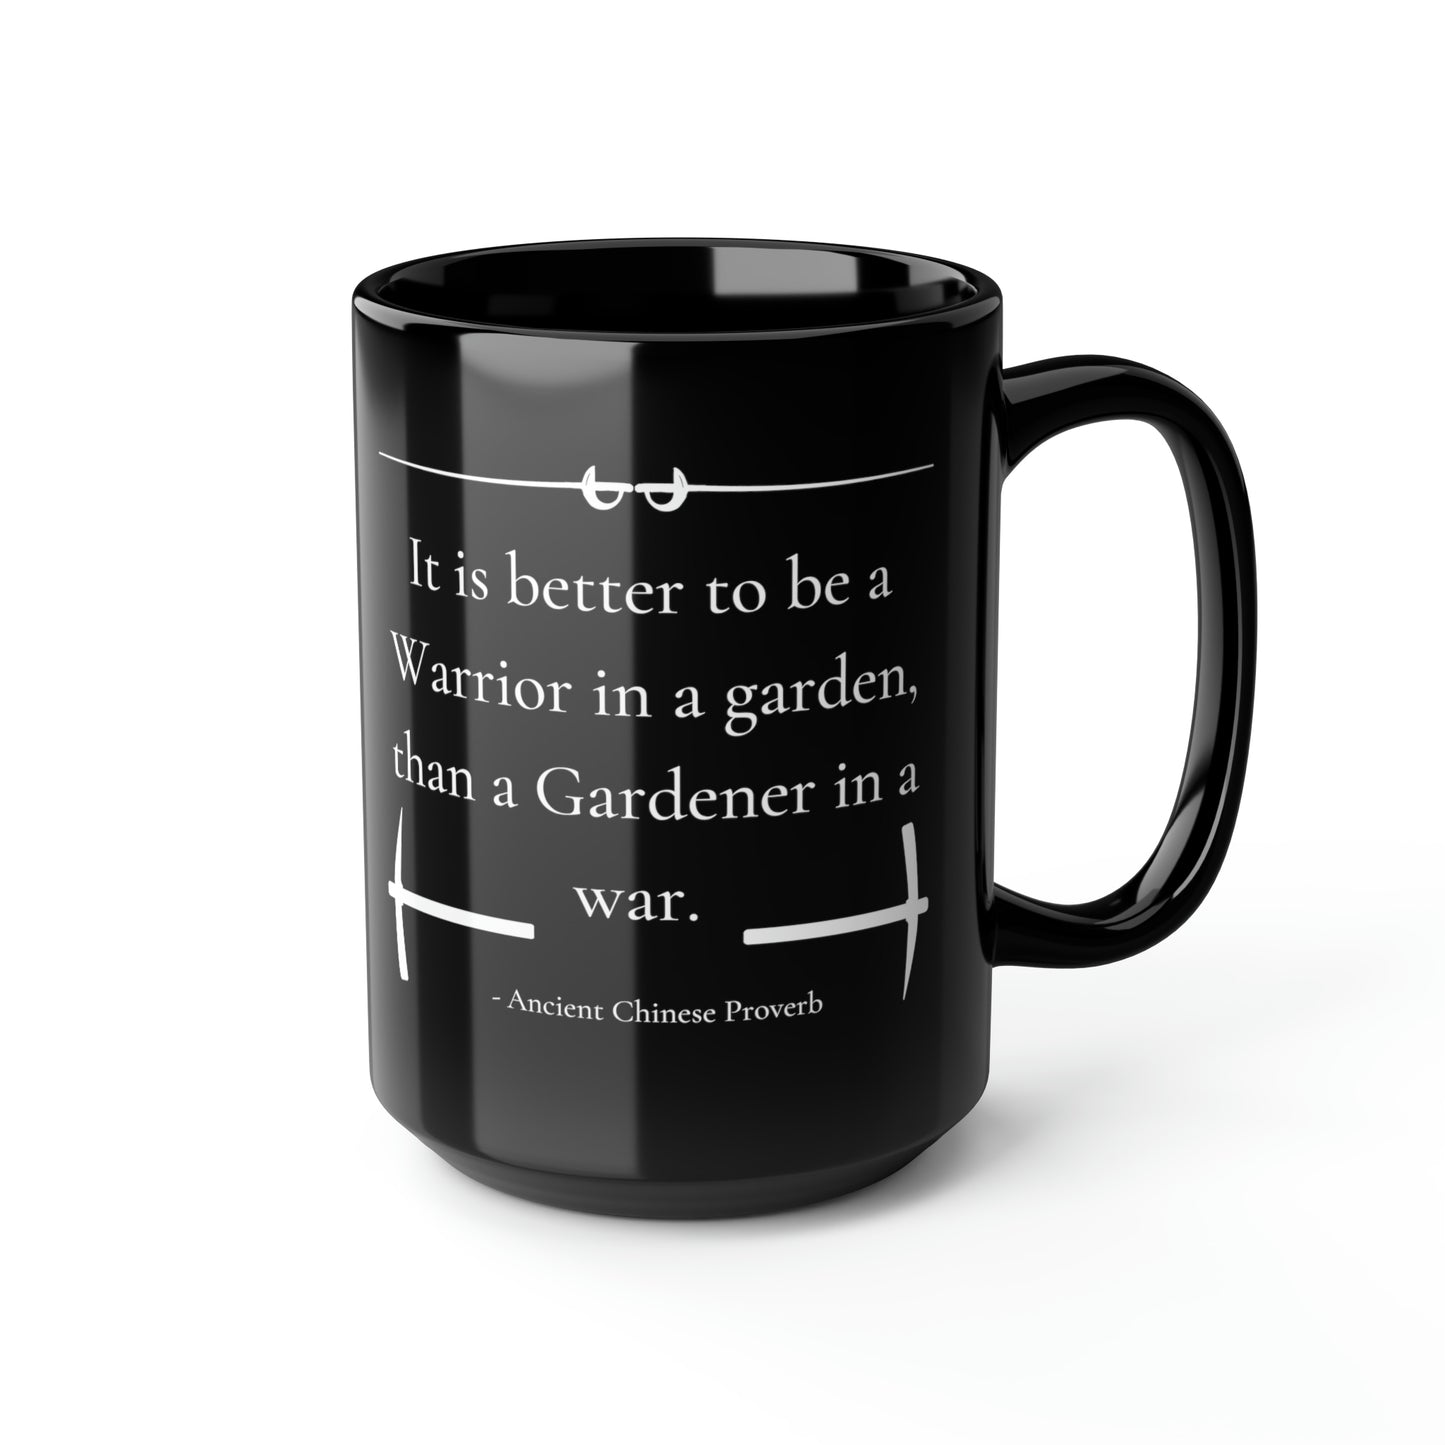 Warrior in a garden - Black Mug, 15oz